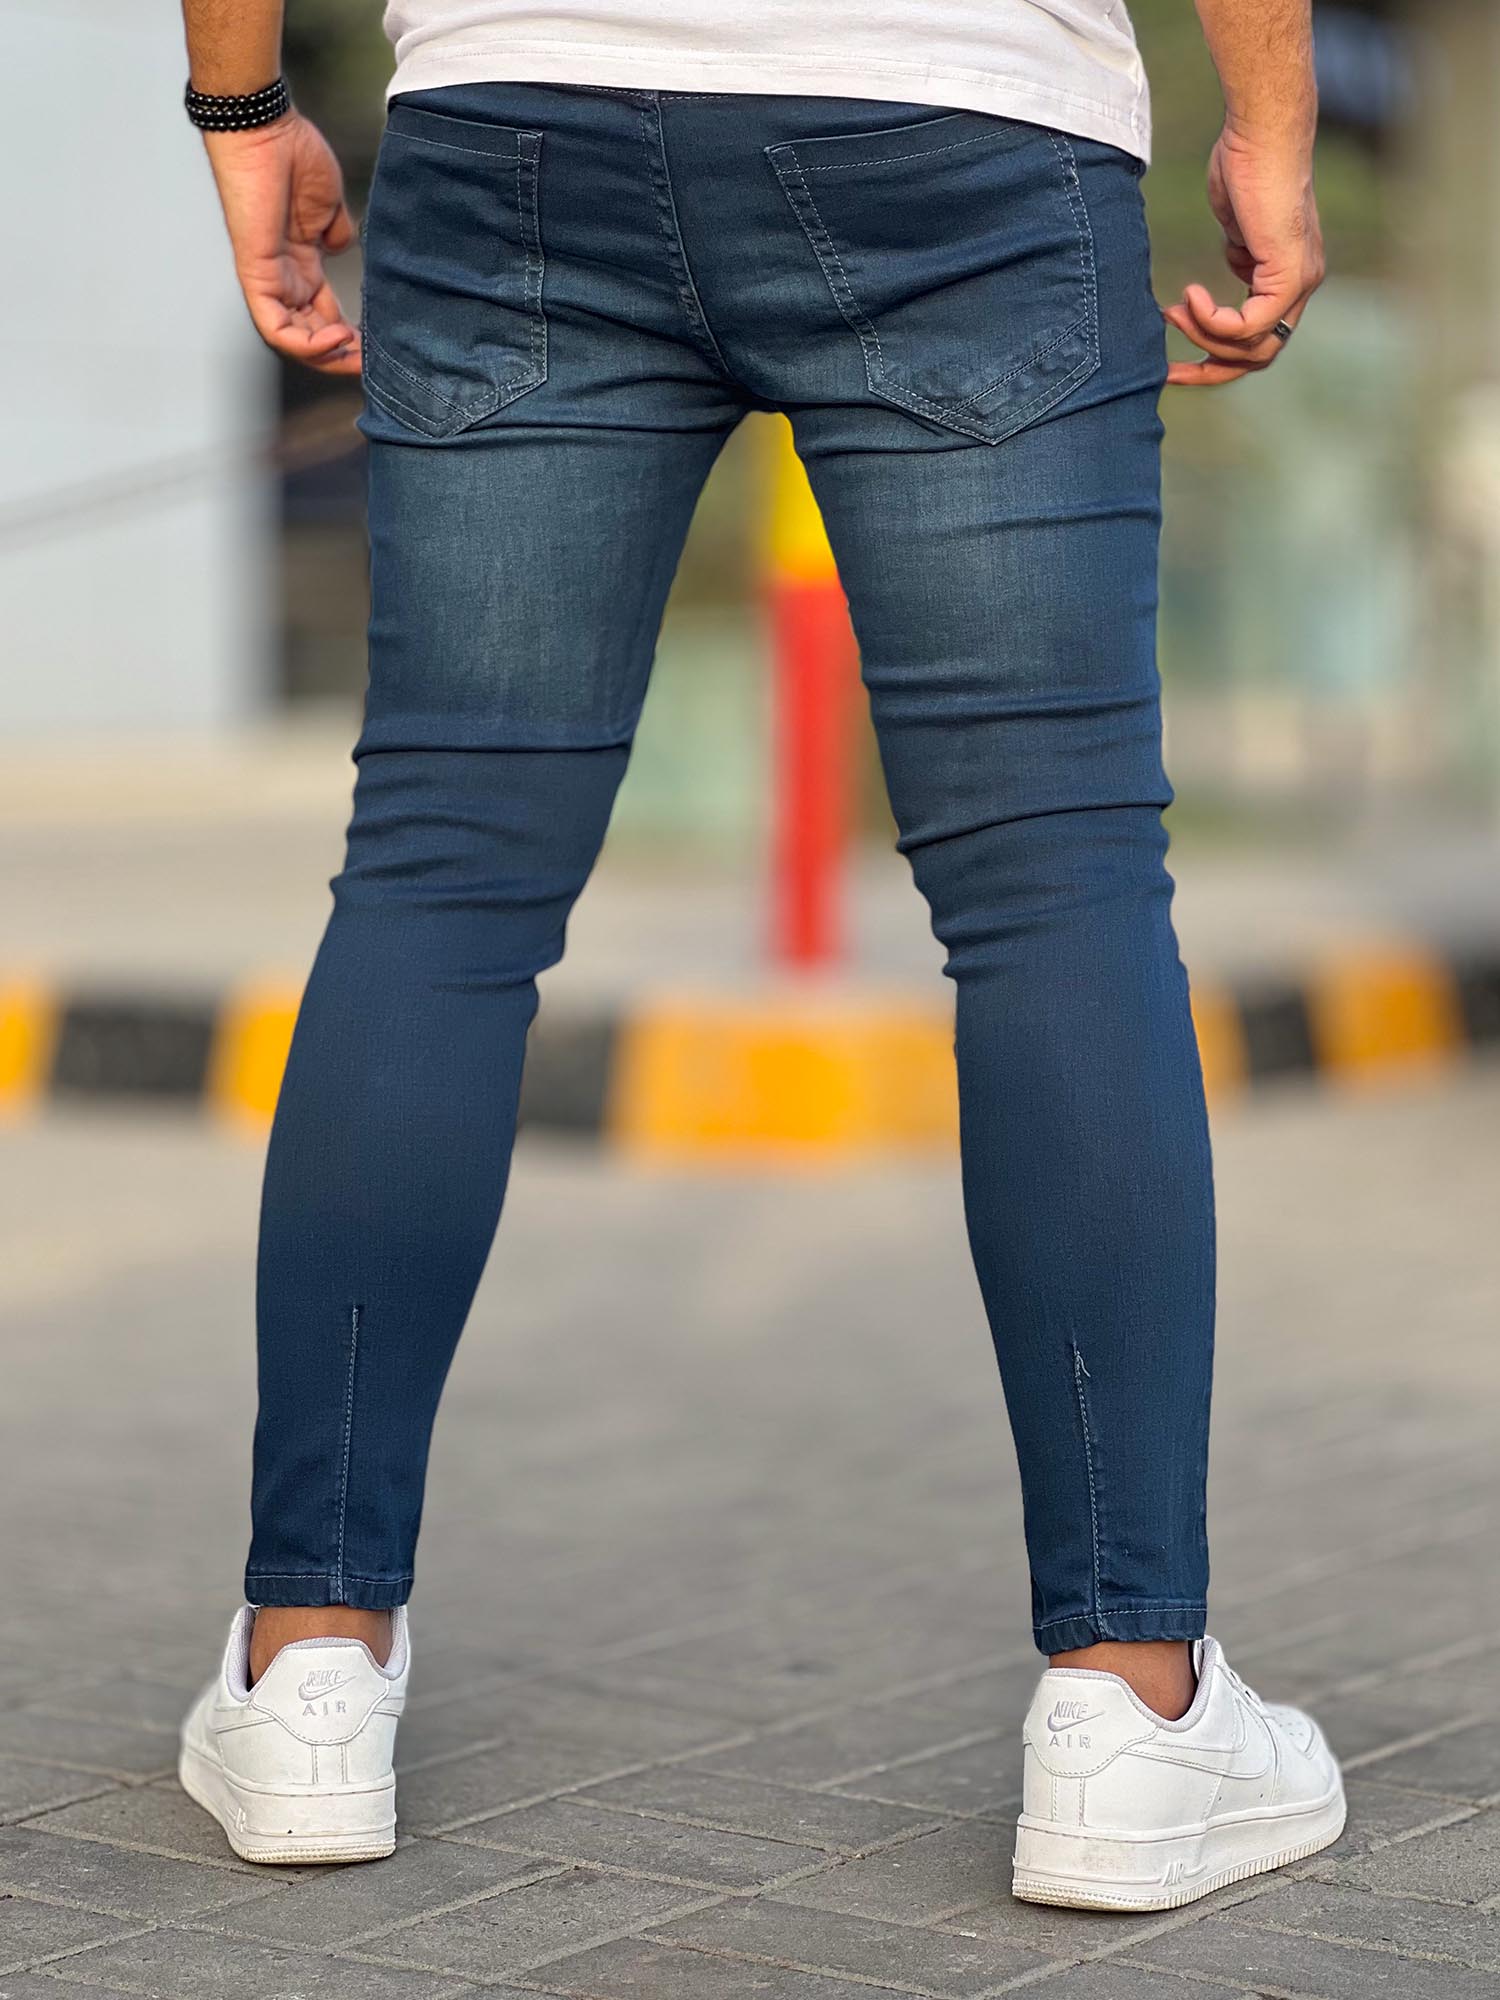 NEW KICK Men's Formal Cotton Pants Tailored Fit Ankle Length Trouser